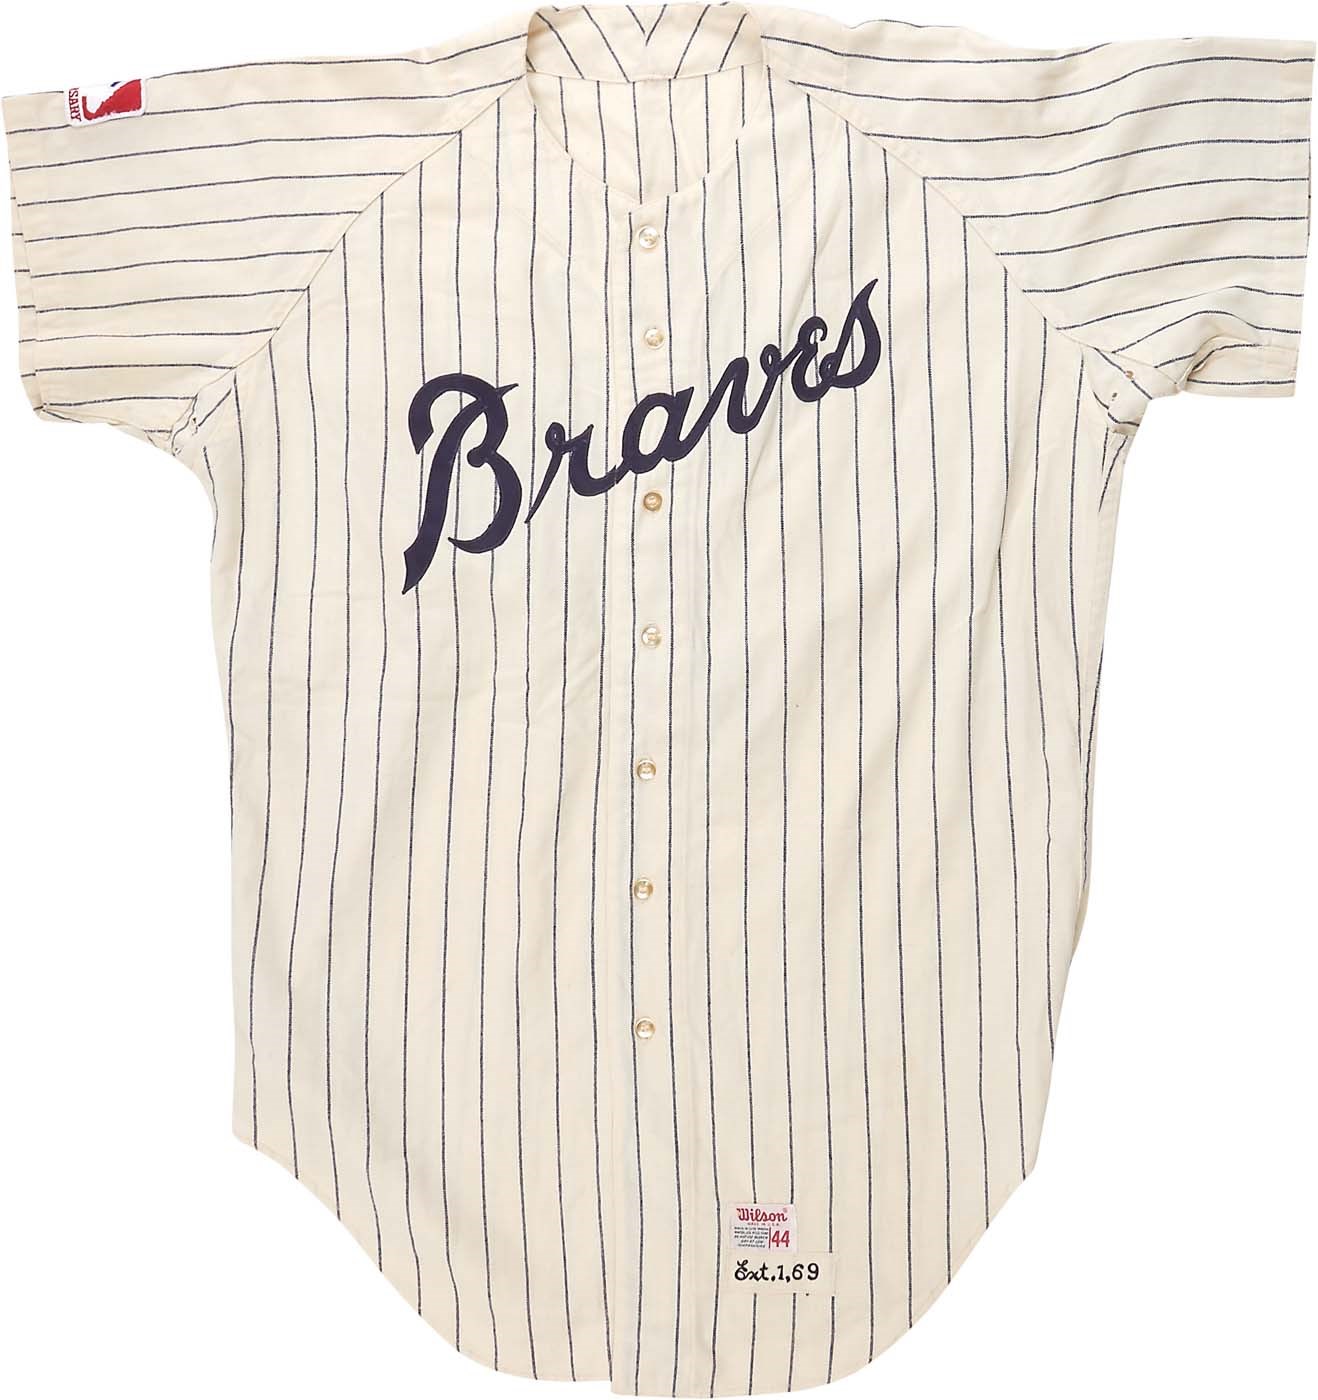 Baseball Equipment - Clete Boyer 1969 Atlanta Braves Home Pinstripe - "Morgana" Kissing Bandit Jersey